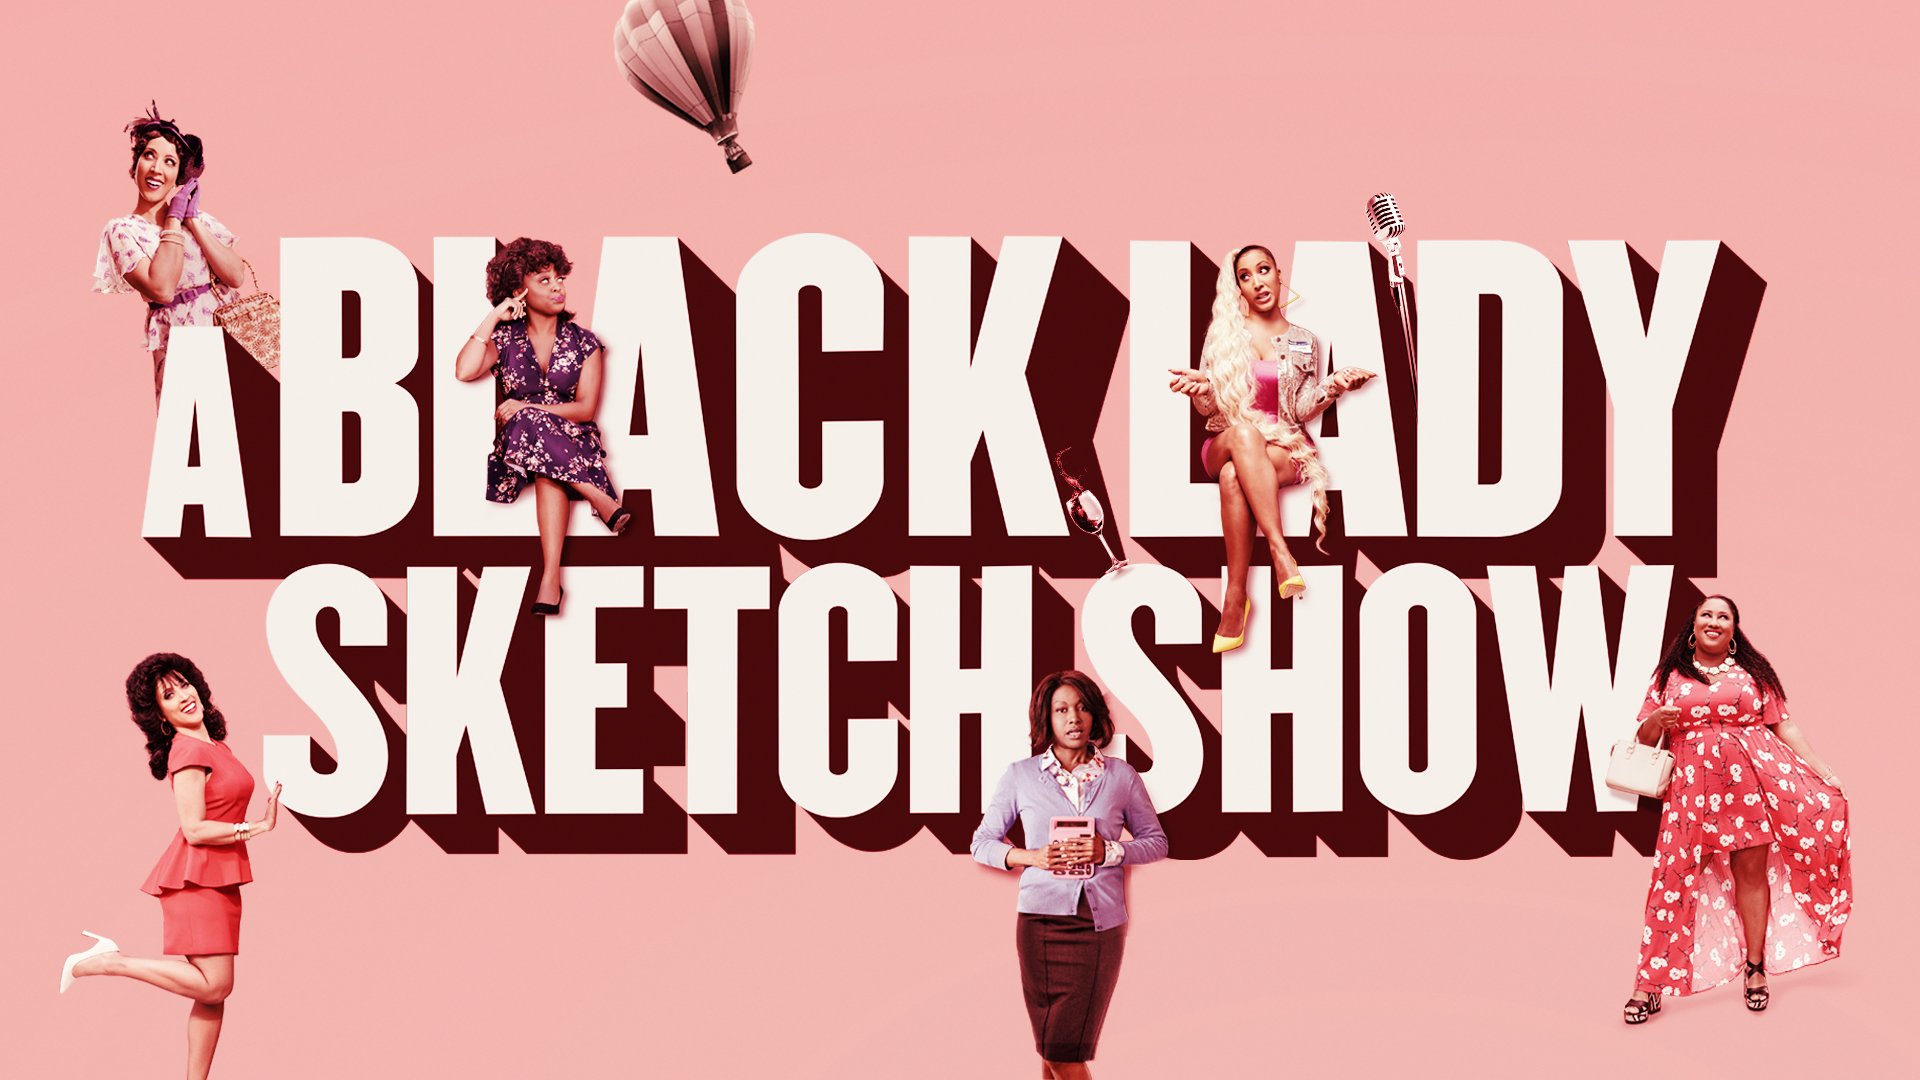 Black Lady Sketch Show.jpg